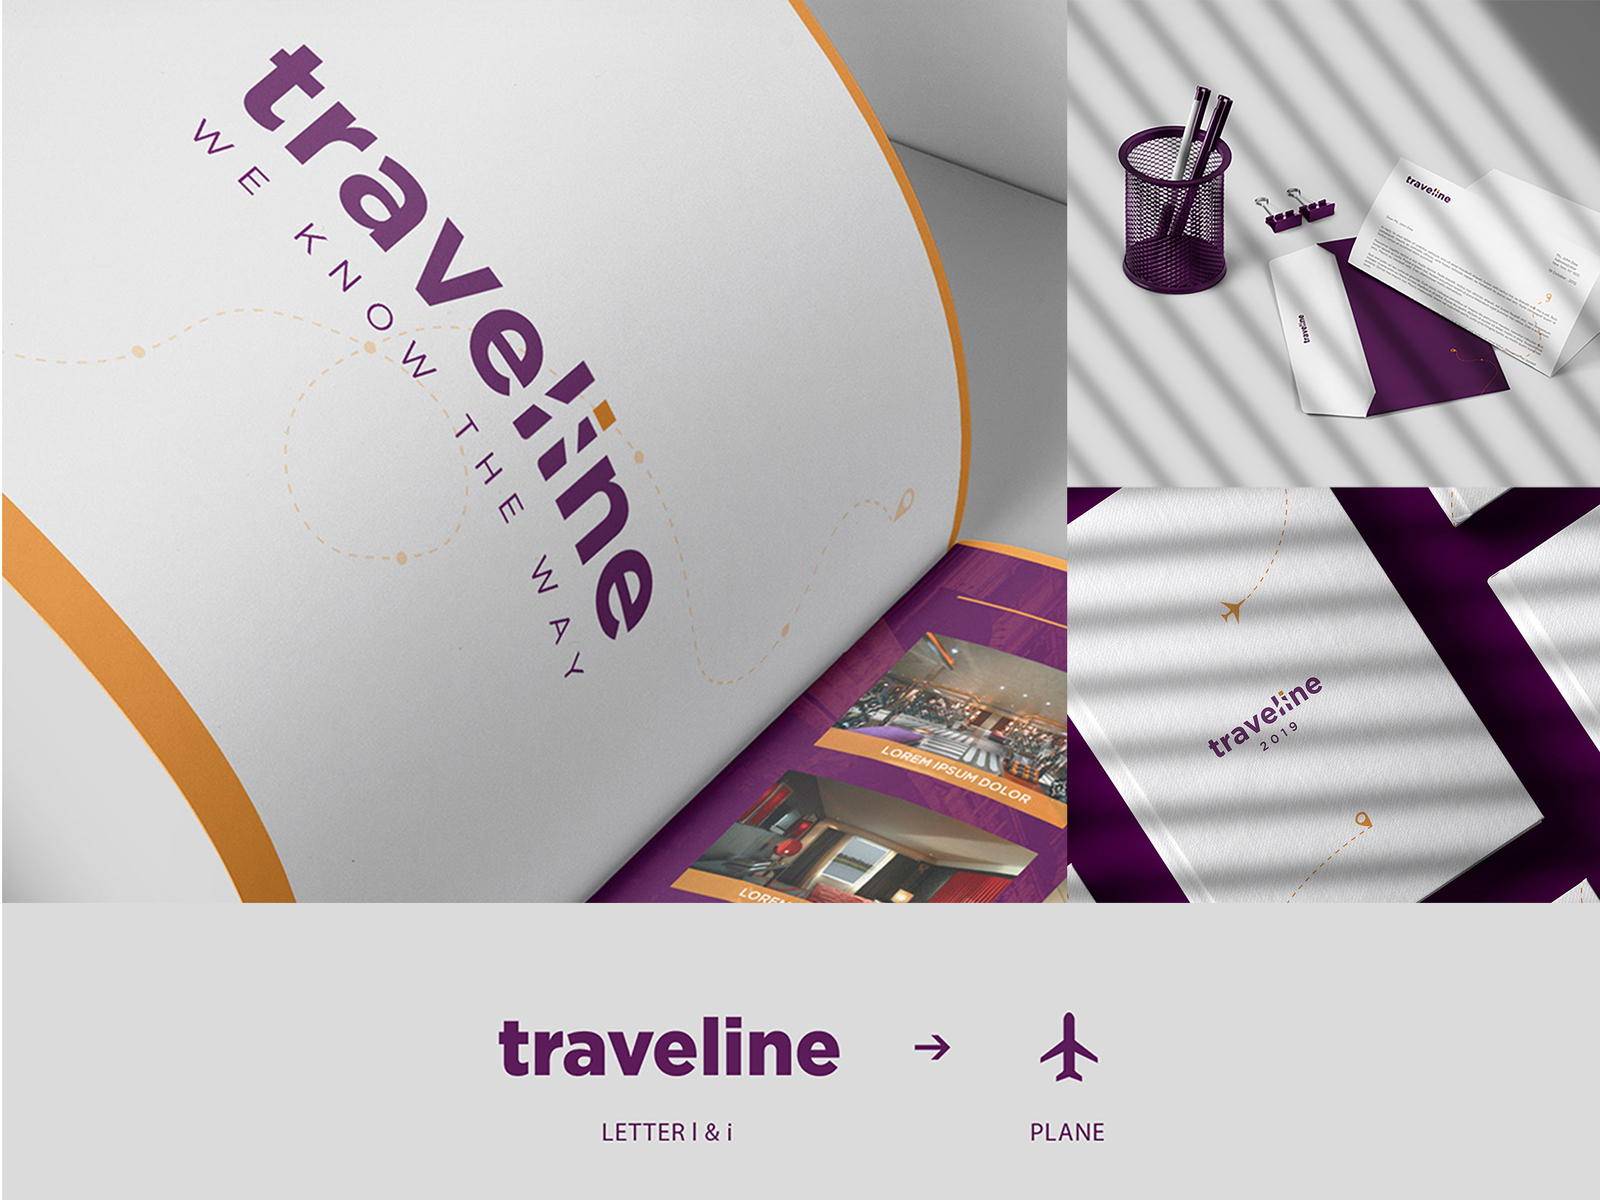 traveline travel agency